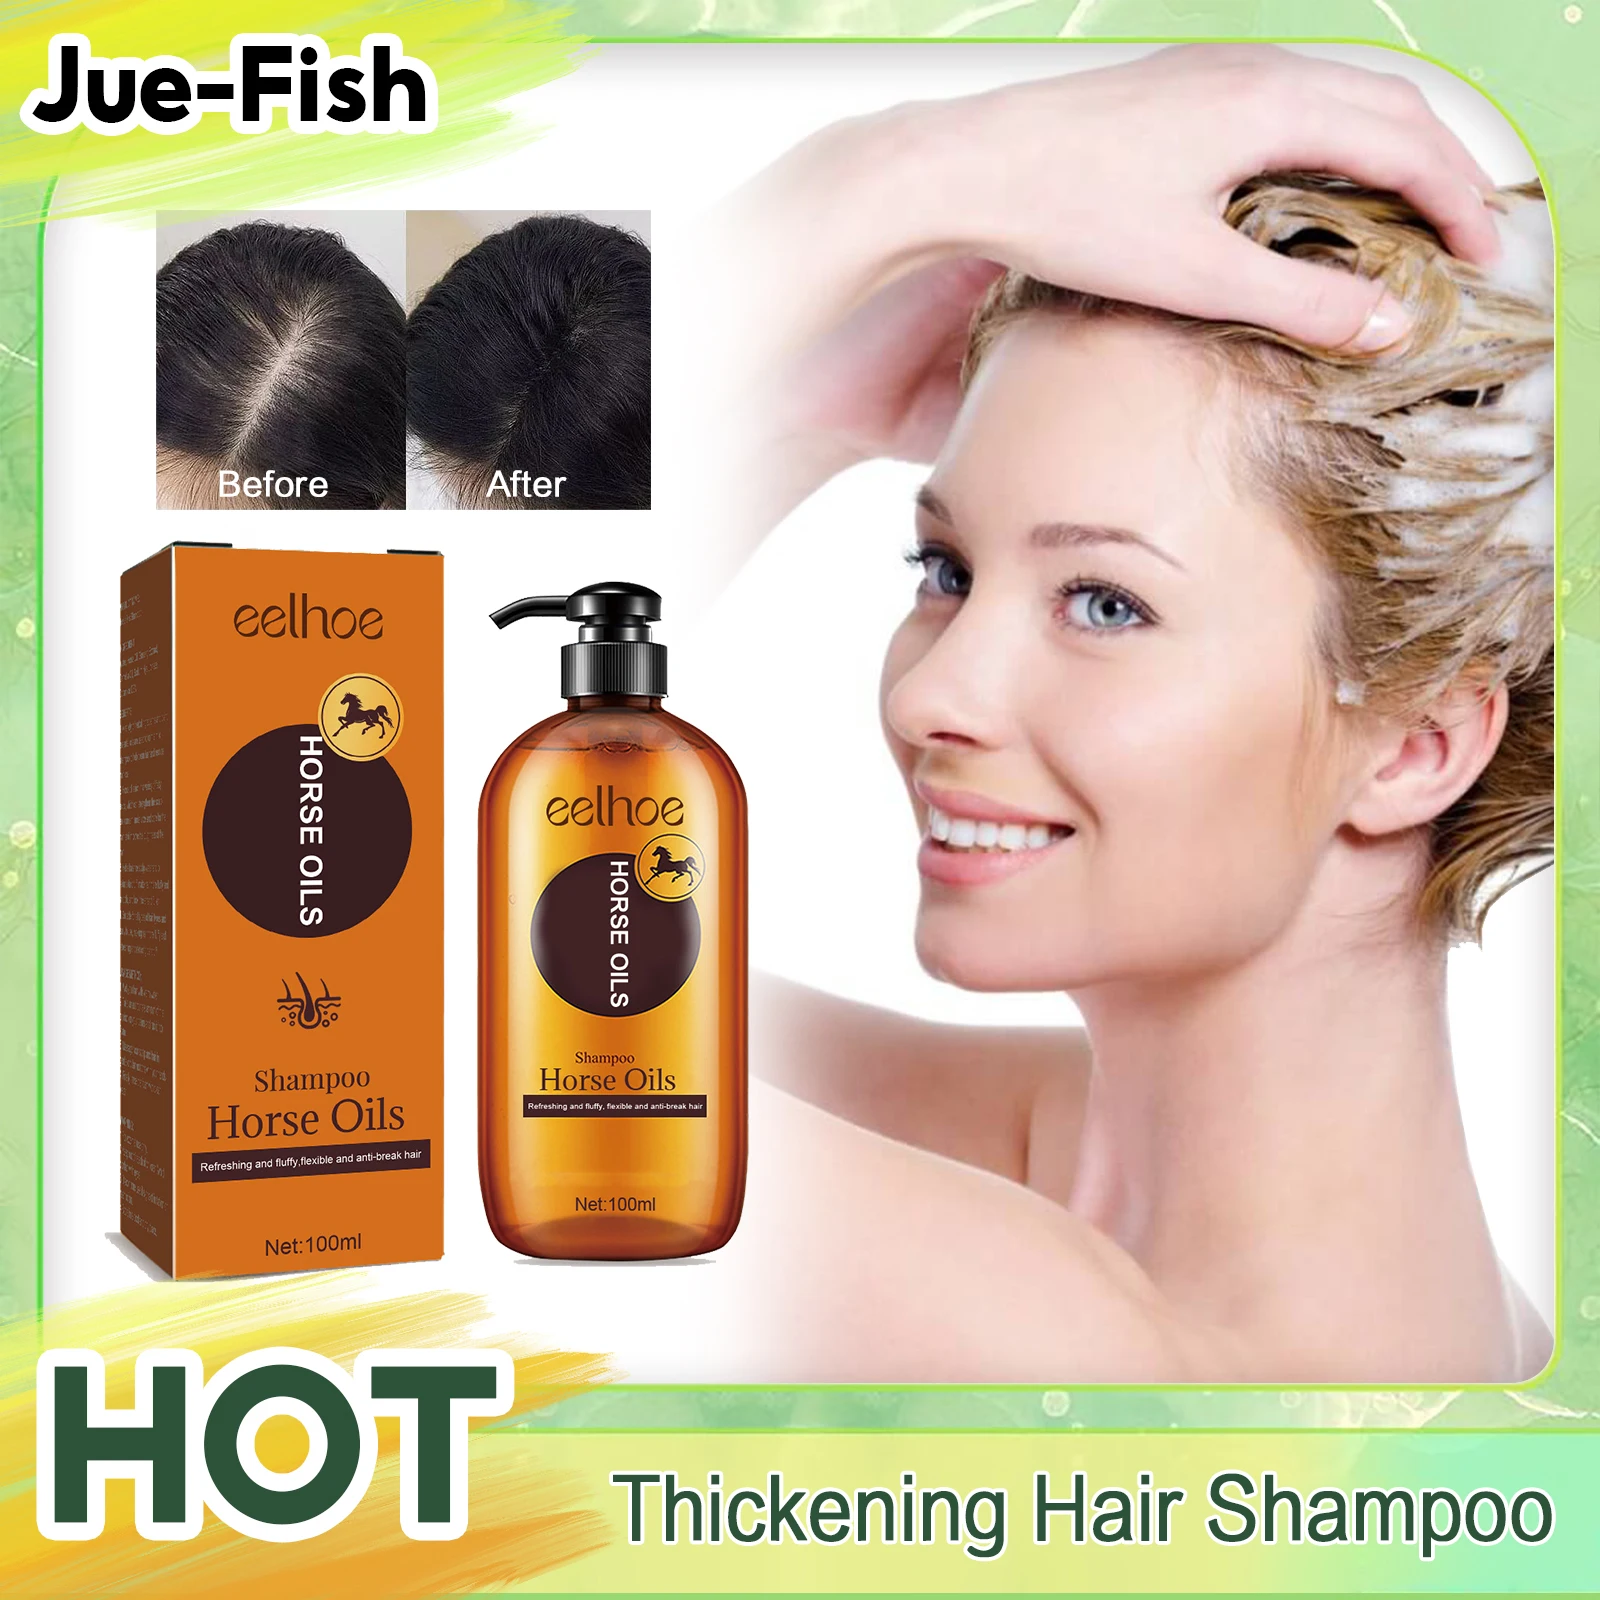 

Thickening Hair Shampoo Deep Cleansing Anti Hair Loss Promote Regrowth Nourish Scalp Treatment Baldness Anti Thinning Hair Care